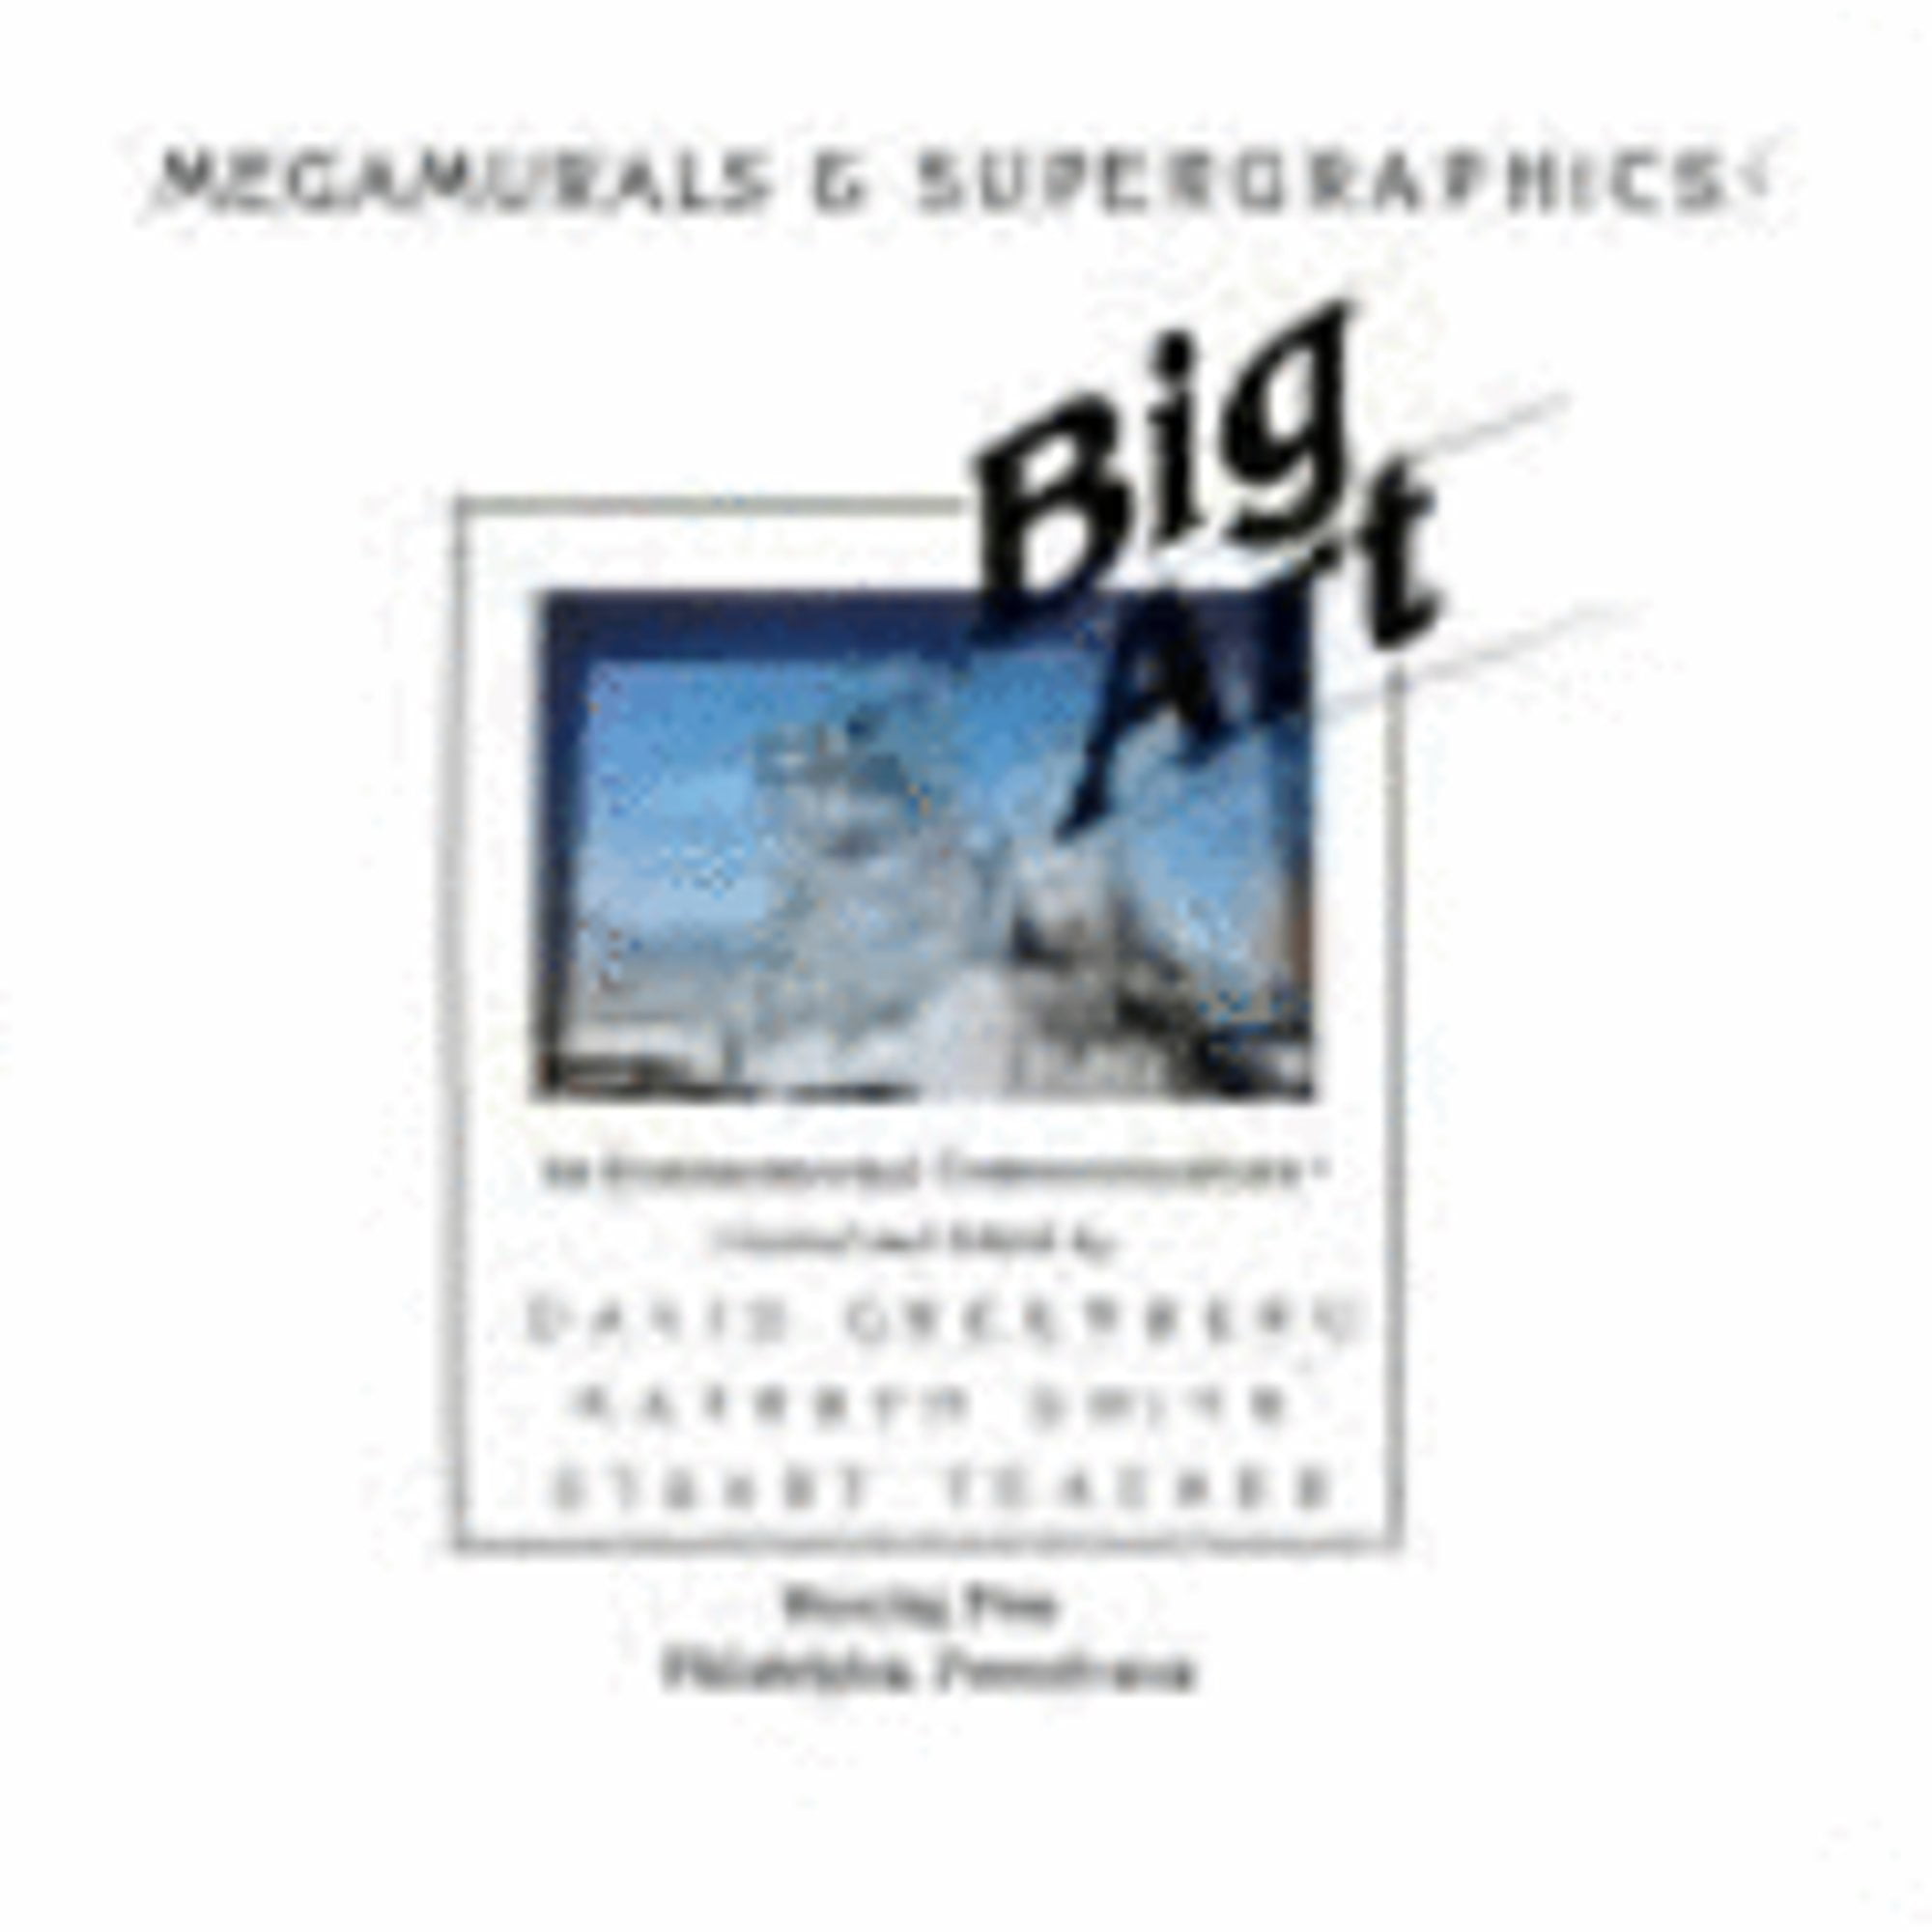 Pre-Owned Big art: Megamurals  supergraphics Paperback David editor ; Smith Environmental Communications Firm Greenberg